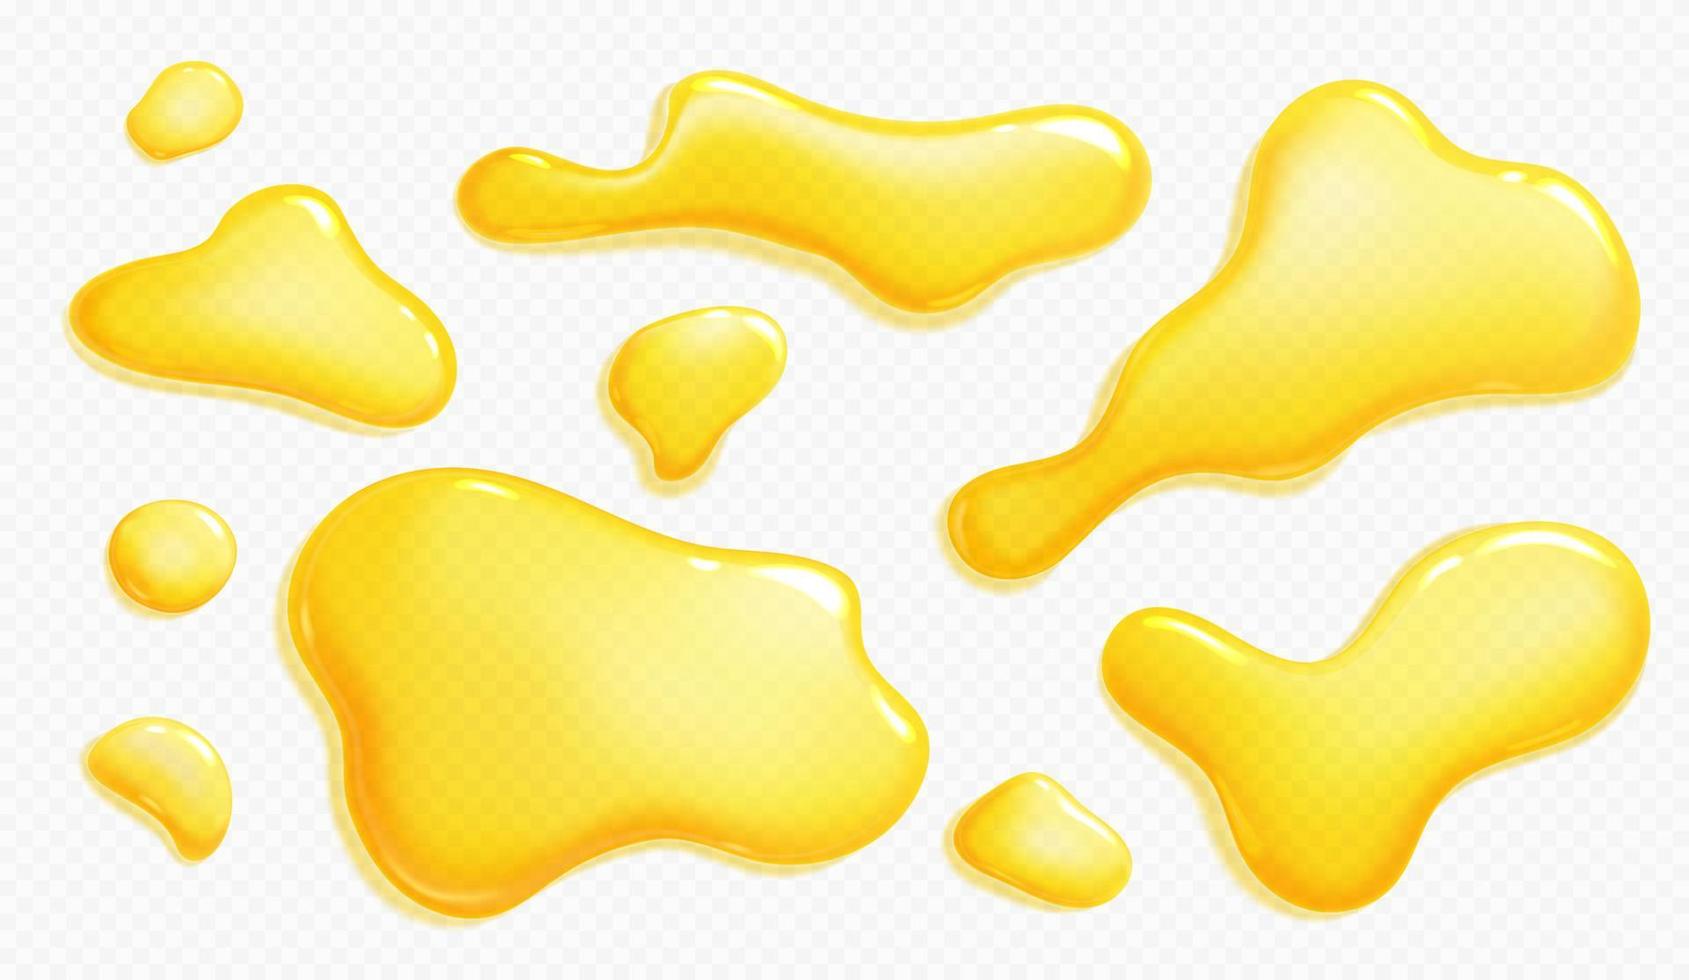 naranja jugo, miel o petróleo derrames y gotas vector